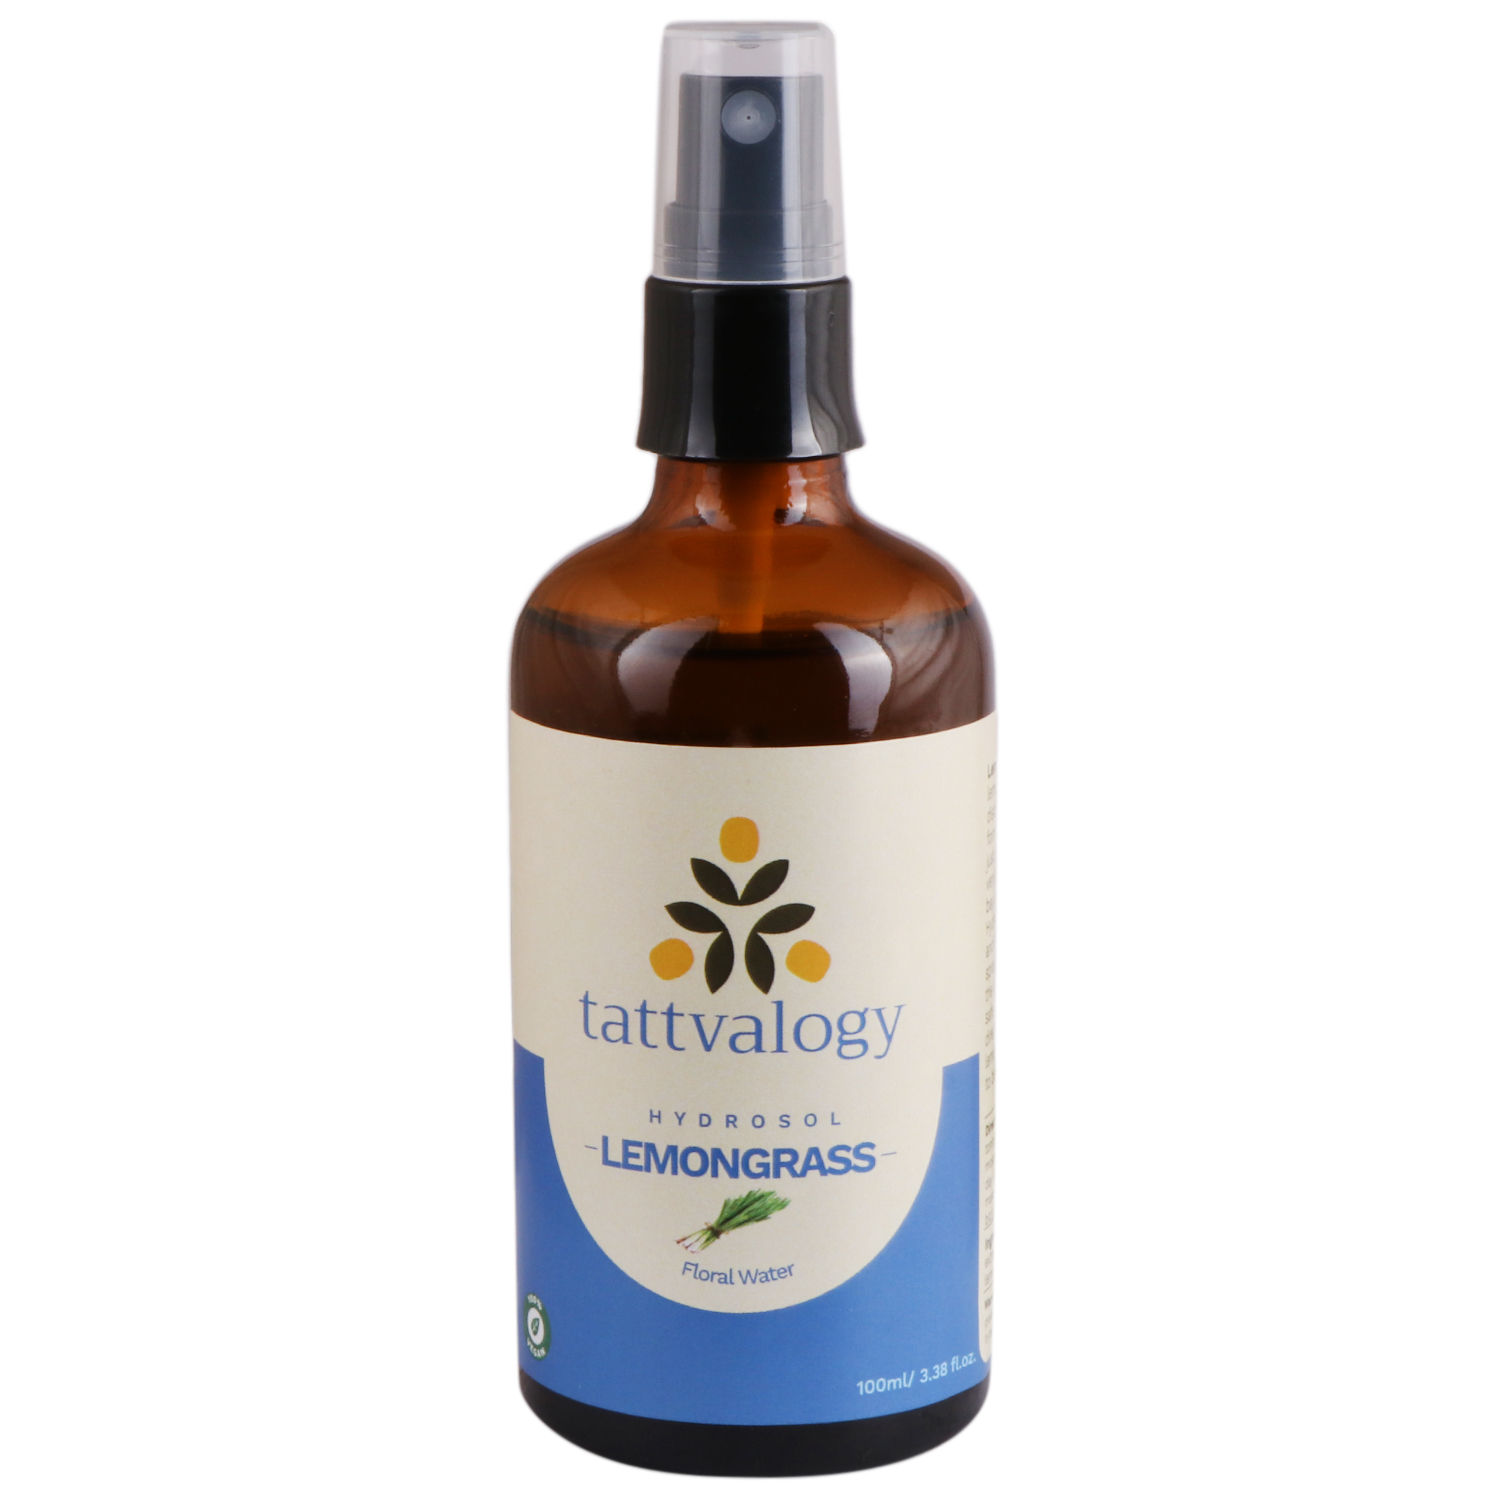 Tattvalogy Lemongrass Hydrosol-Toner for Oily Skin, 100% Natural Mosquito Repellent Body Spray